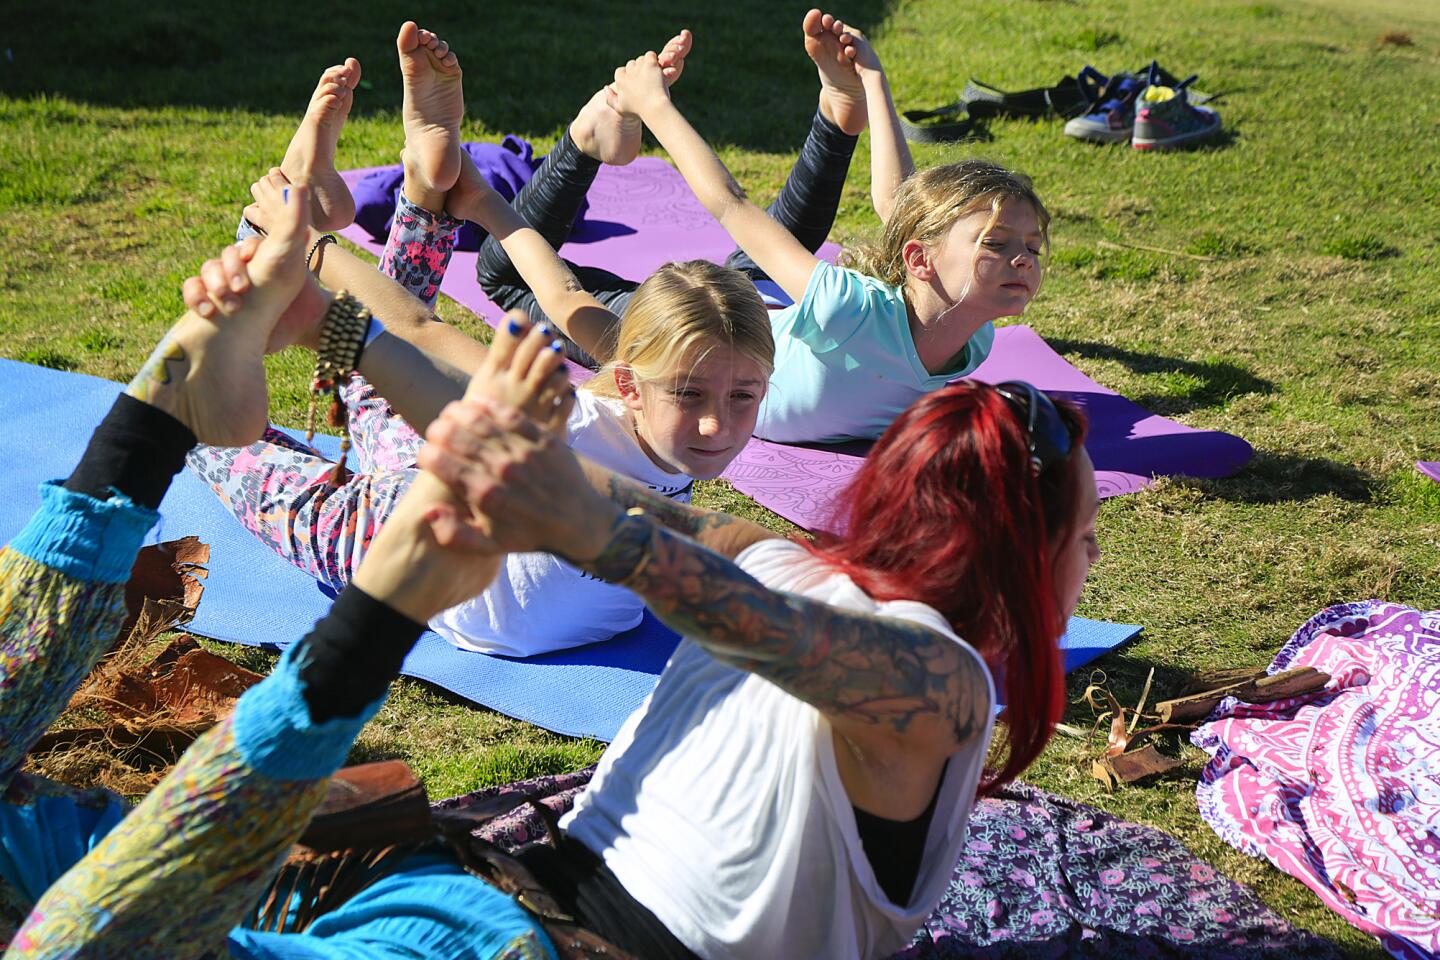 Yoga festival draws hundreds to Ocean Beach - The San Diego Union-Tribune